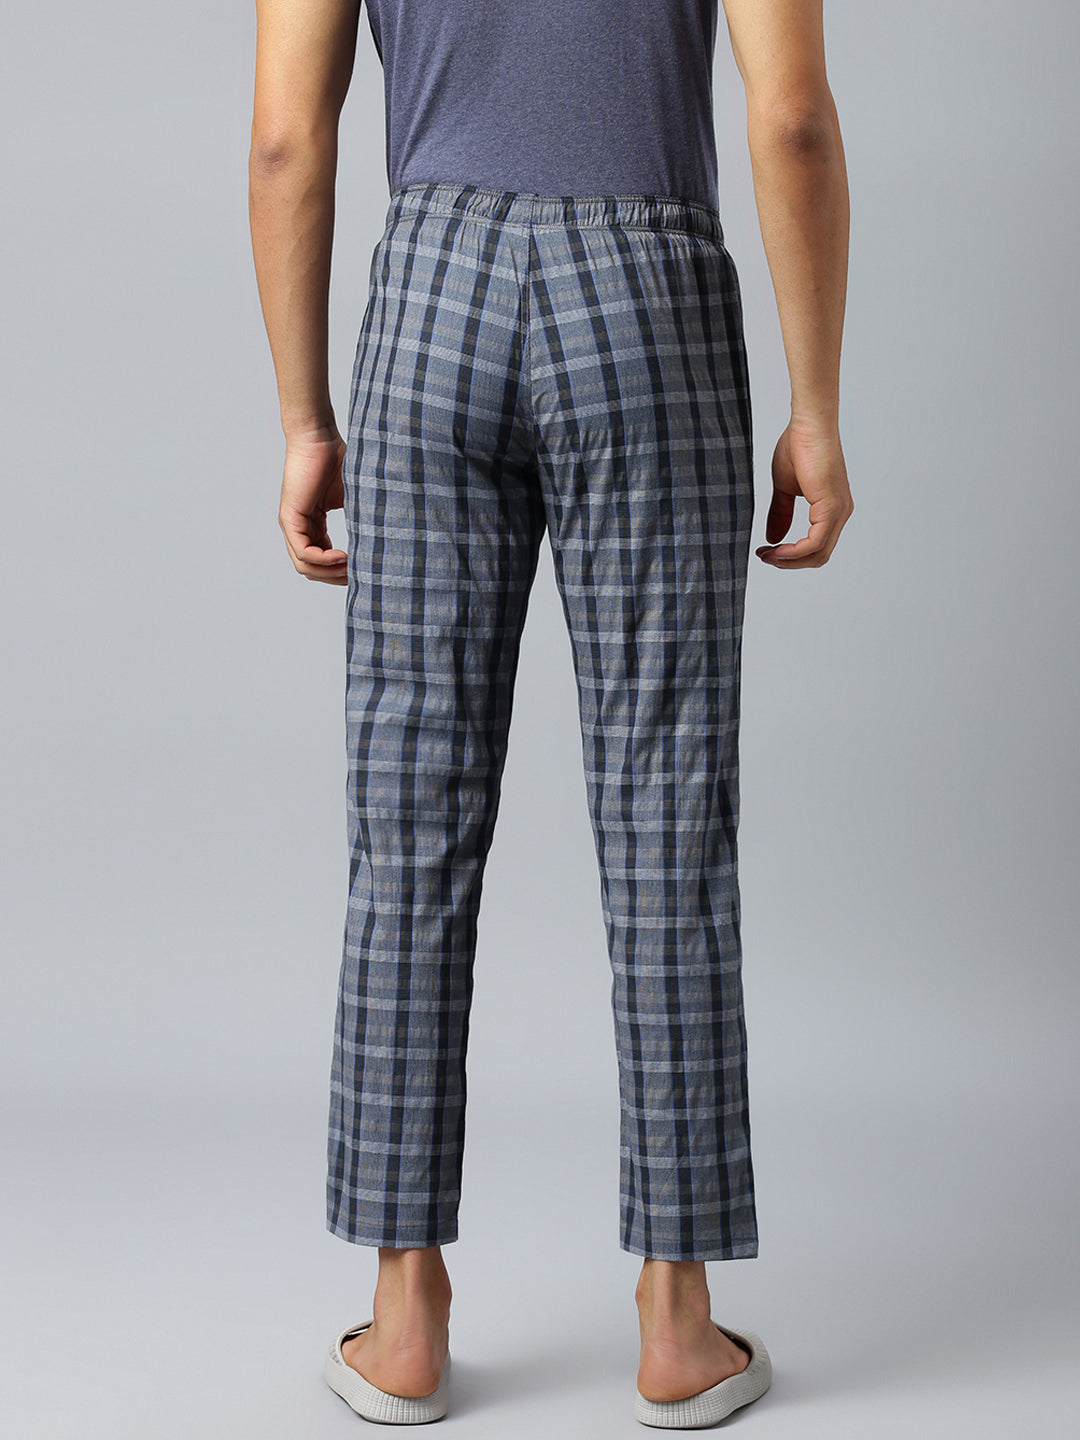 Don Vino Men's Light Grey Lounge Pants With Blue Checks